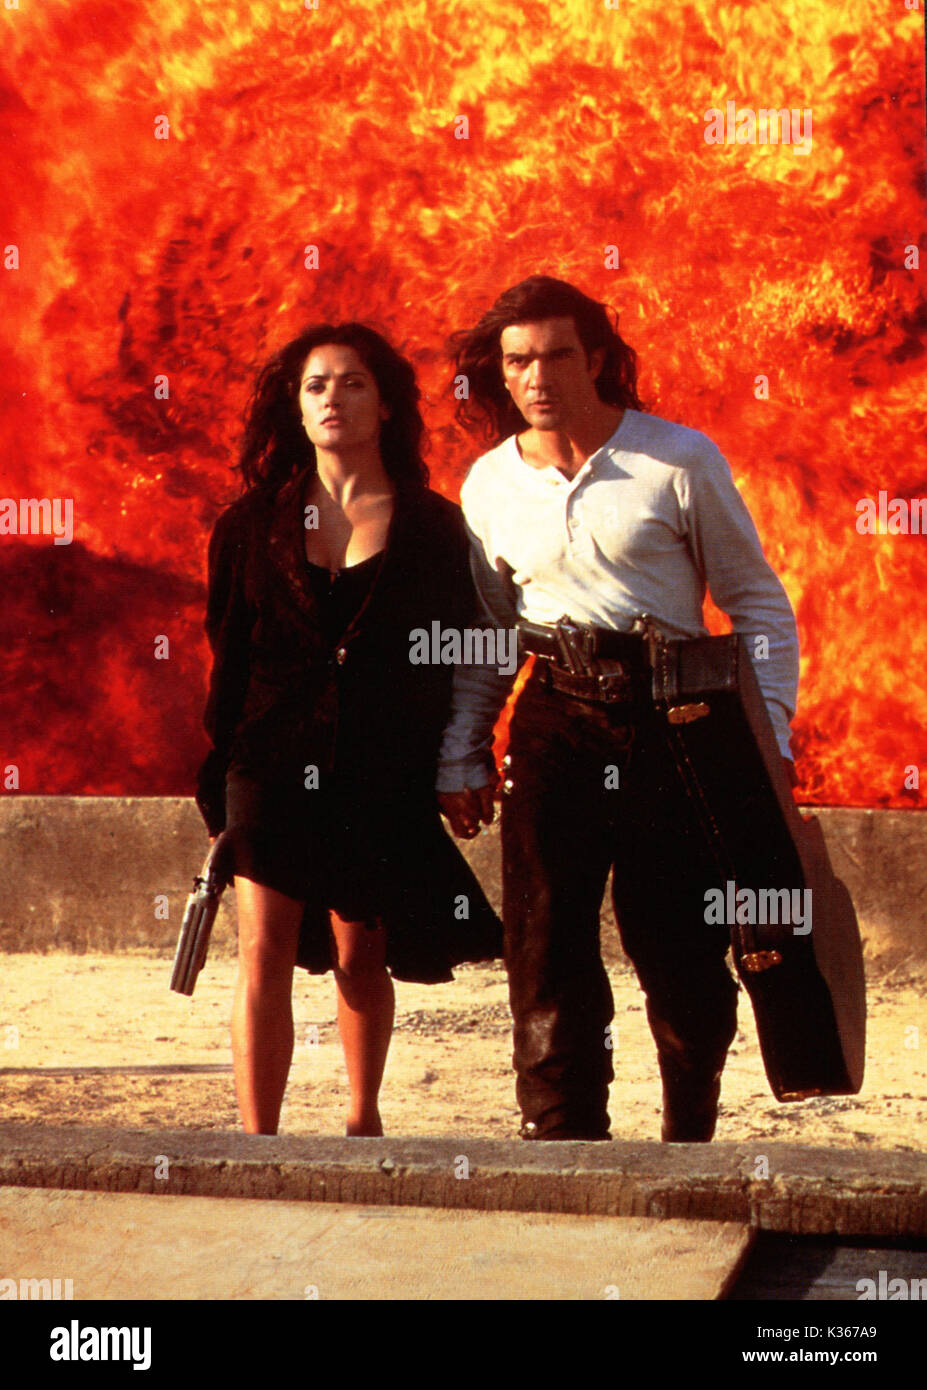 DESPERADO Salma Hayek und Antonio Banderas Regie: ROBERT RODRIGUEZ FILM VON COLUMBIA PICTURES CORP. Datum: 1995 Stockfoto